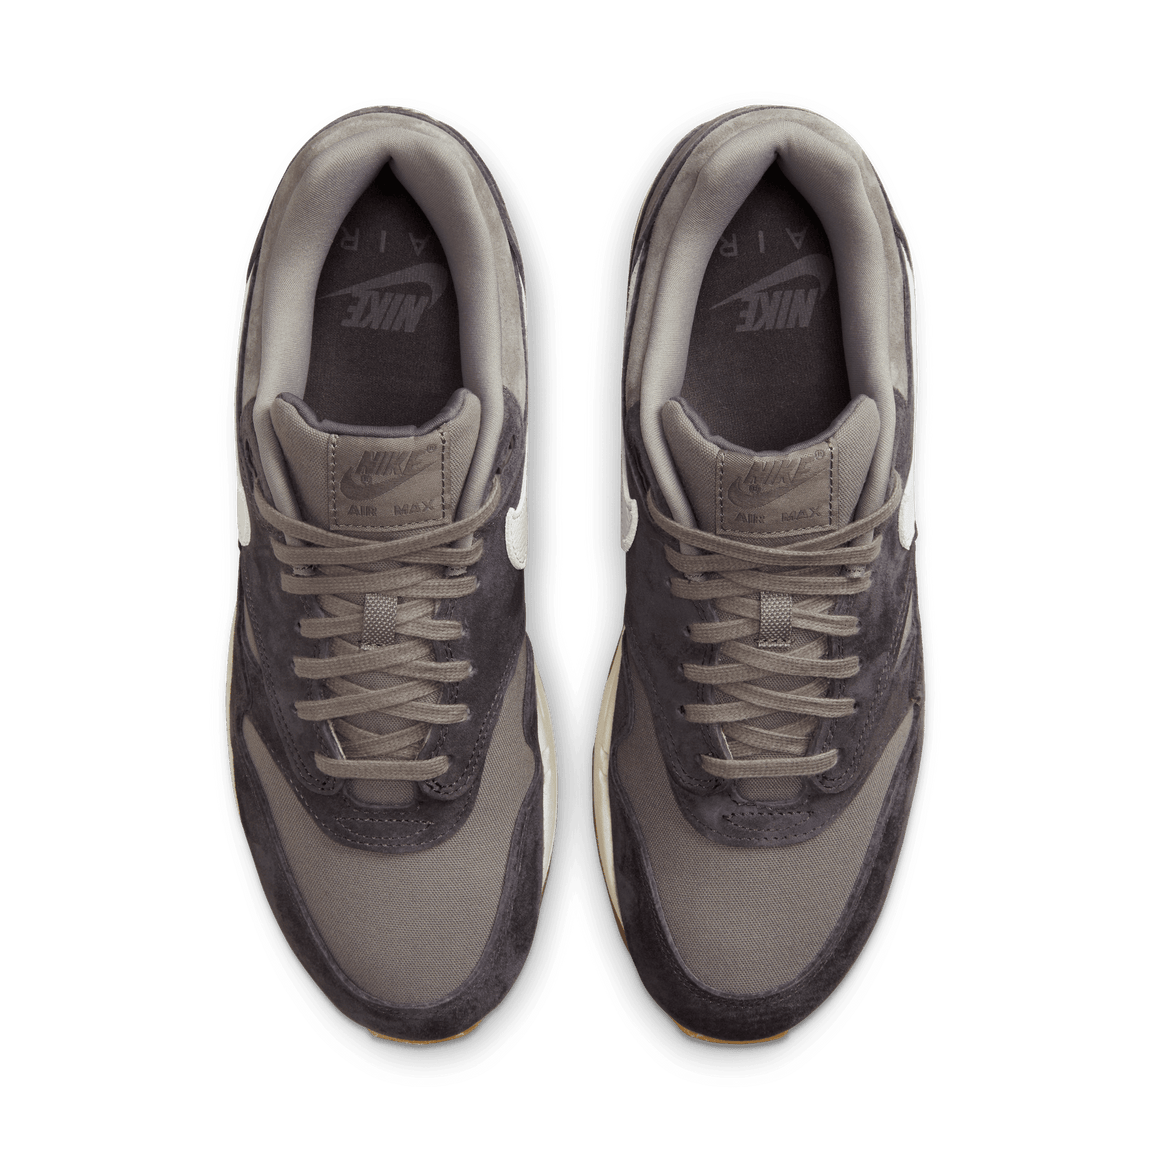 Nike Air Max 1 Premium 'Crepe' (Soft Grey/Neutral Grey/Thunder Grey) - Nike Air Max 1 Premium 'Crepe' (Soft Grey/Neutral Grey/Thunder Grey) - 